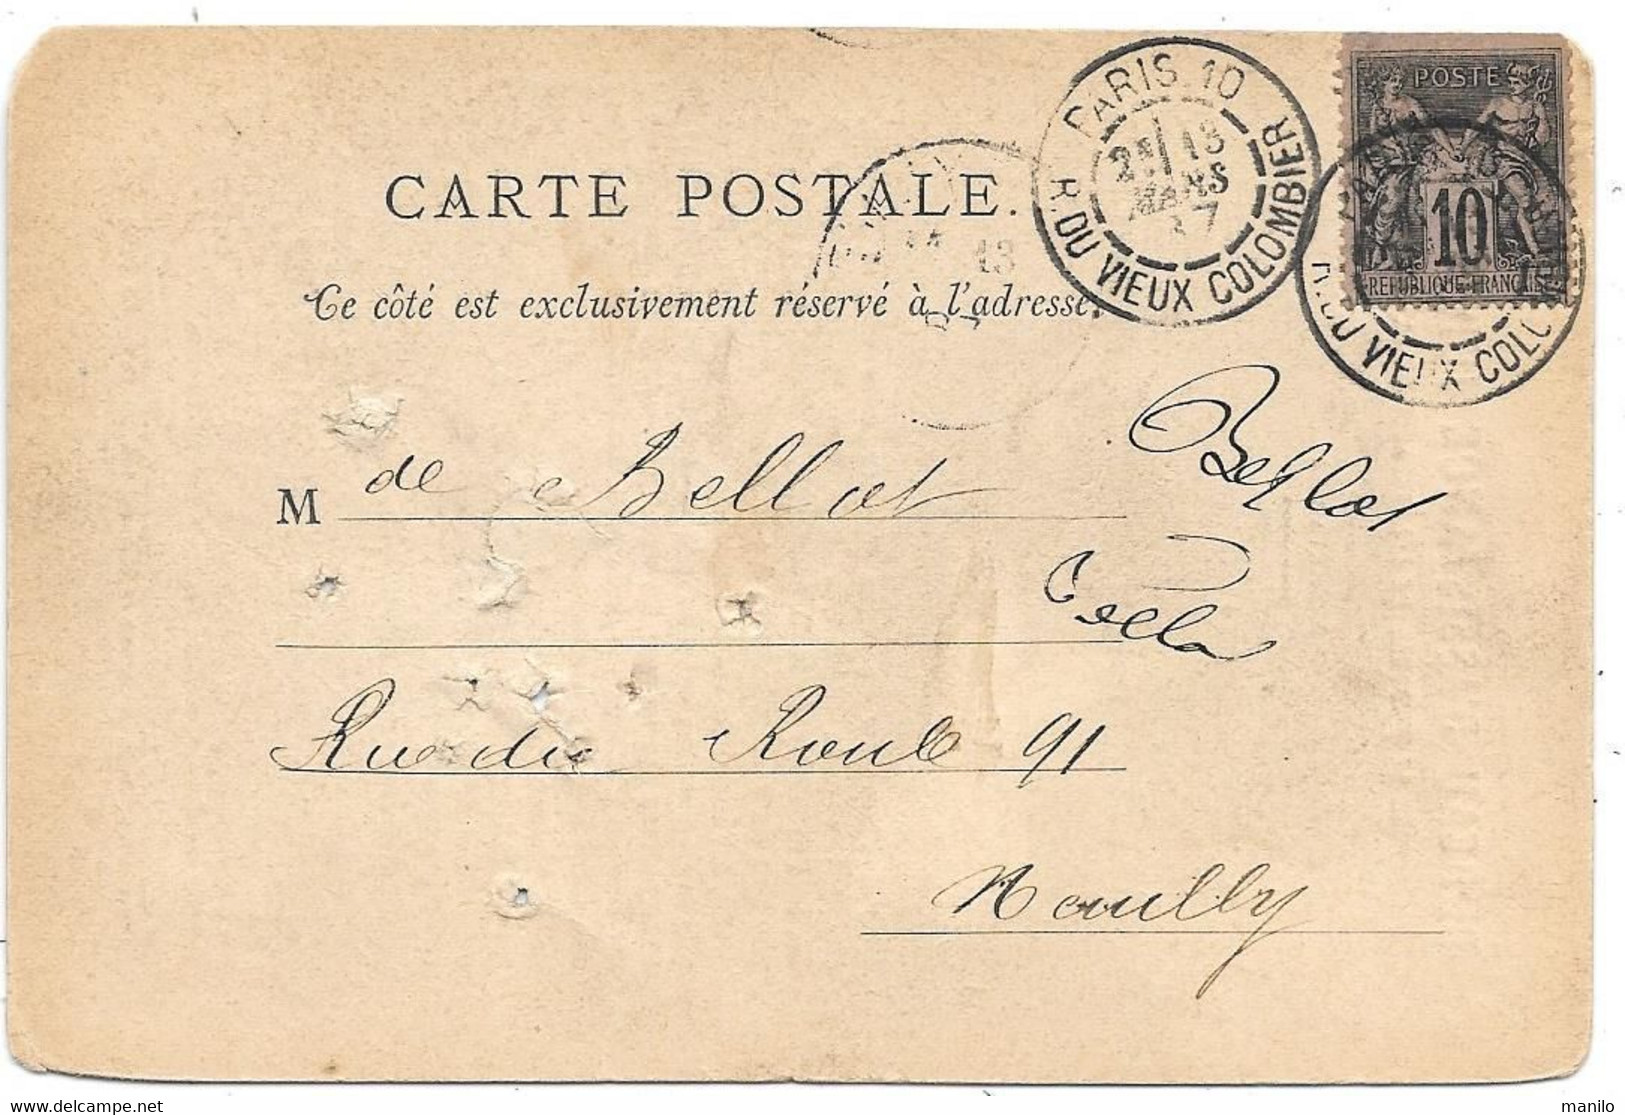 Carte Précurseur Repiquage BUREAU ASSISTANCE JUDICIAIRE 1887 (Refus) Timbre Type SAGE  Paris - Neuilly S/seine -65542 - Voorloper Kaarten